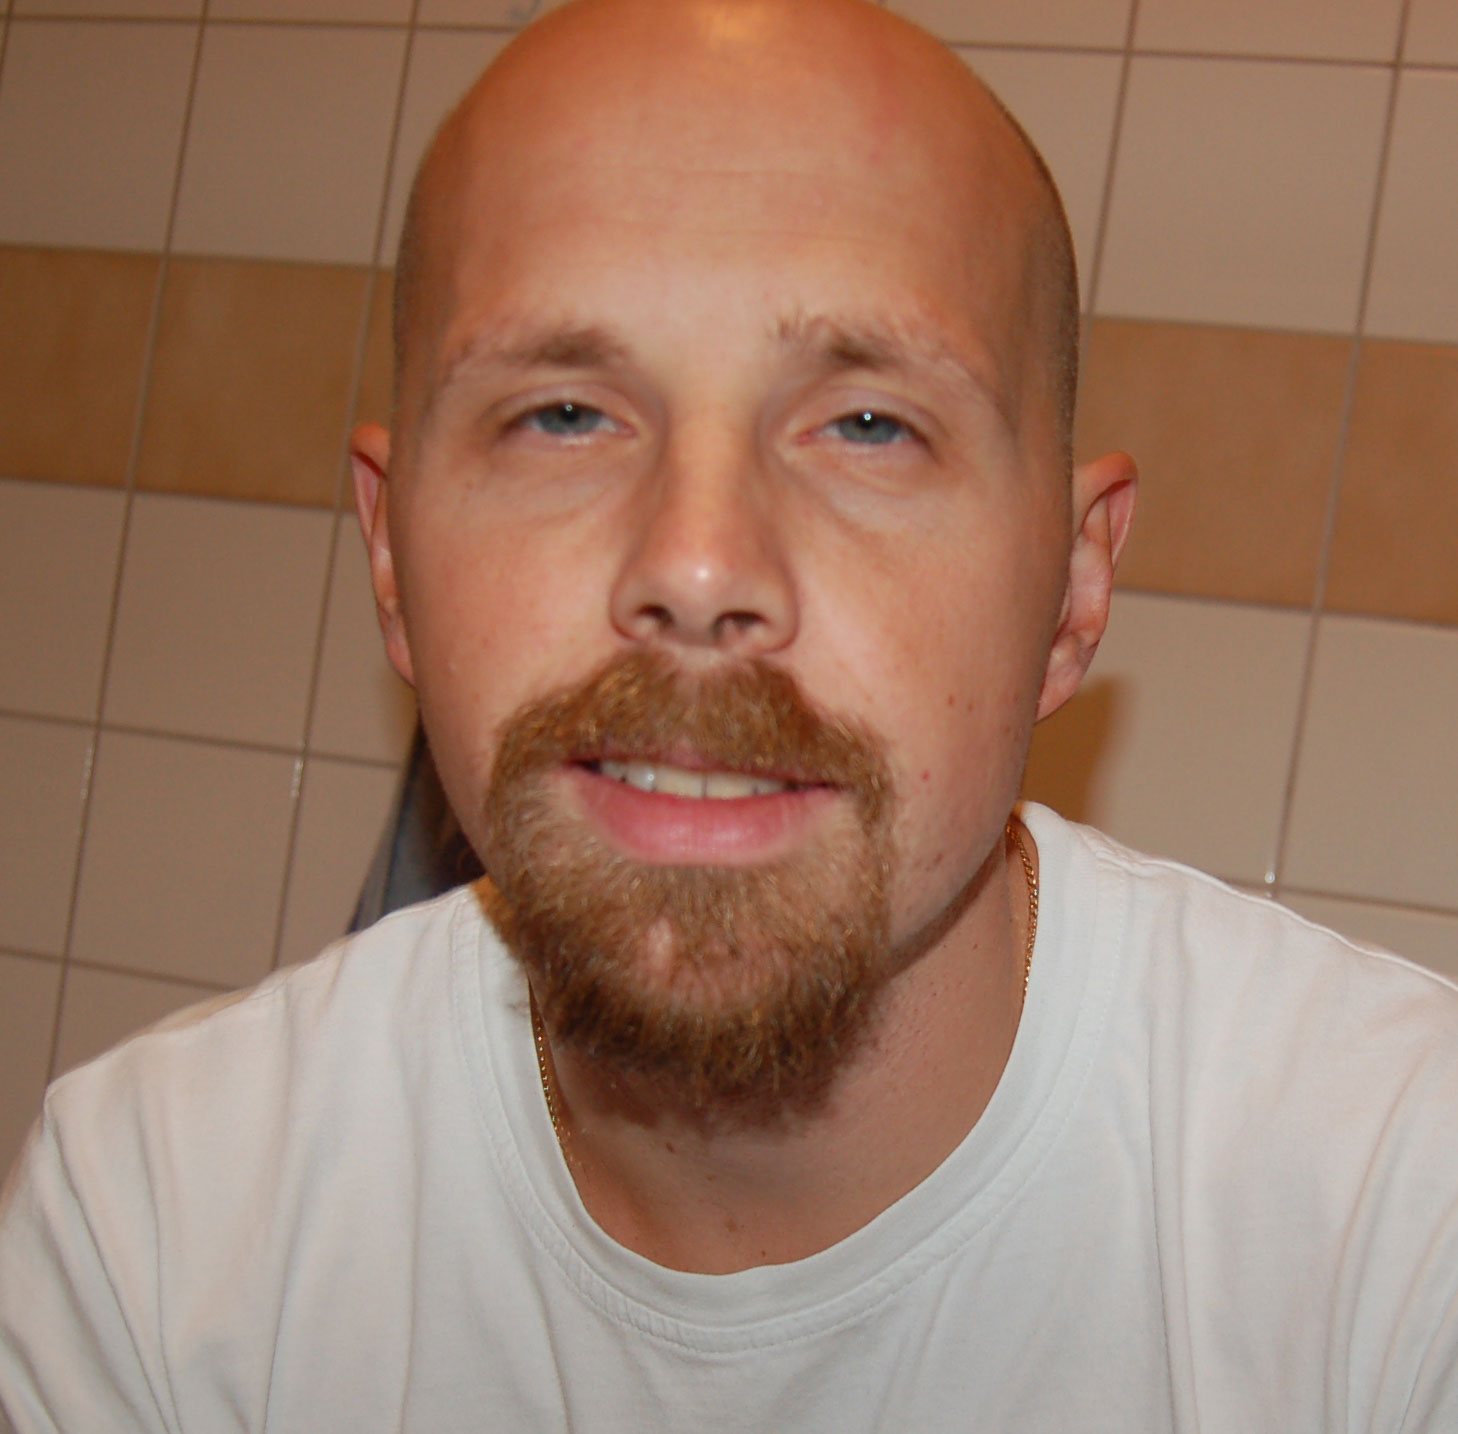 a balding man with an orange beard and a white shirt